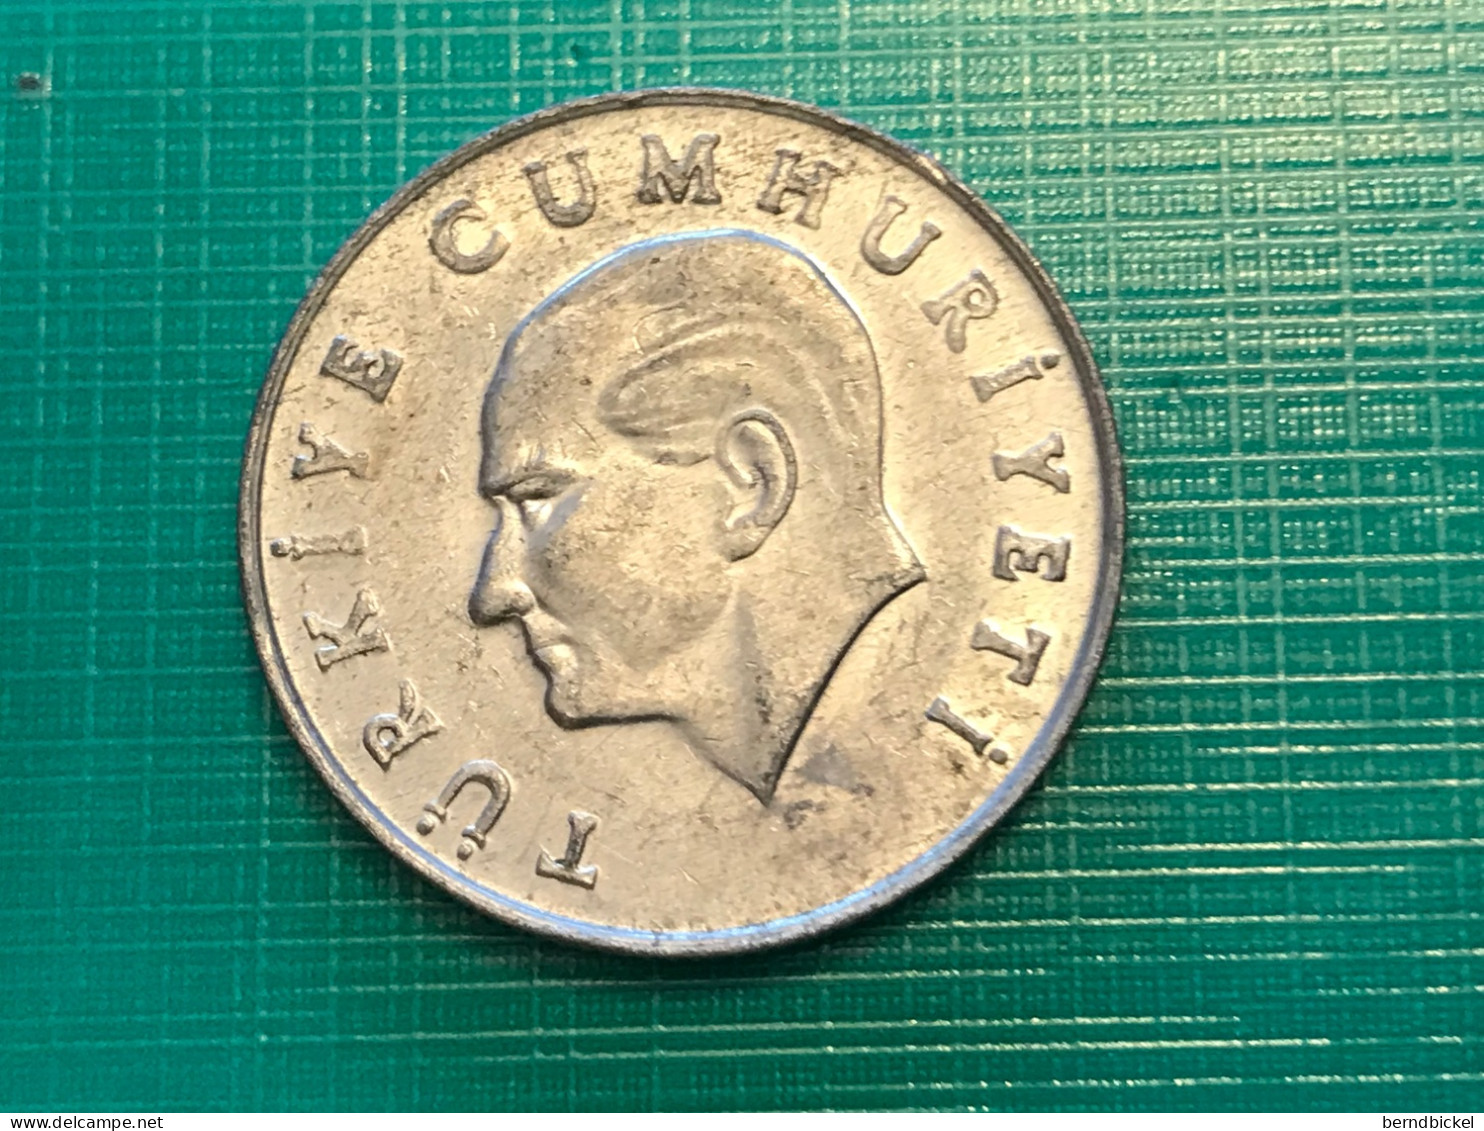 Münze Münzen Umlaufmünze Türkei 10 Lira 1985 - Turquie